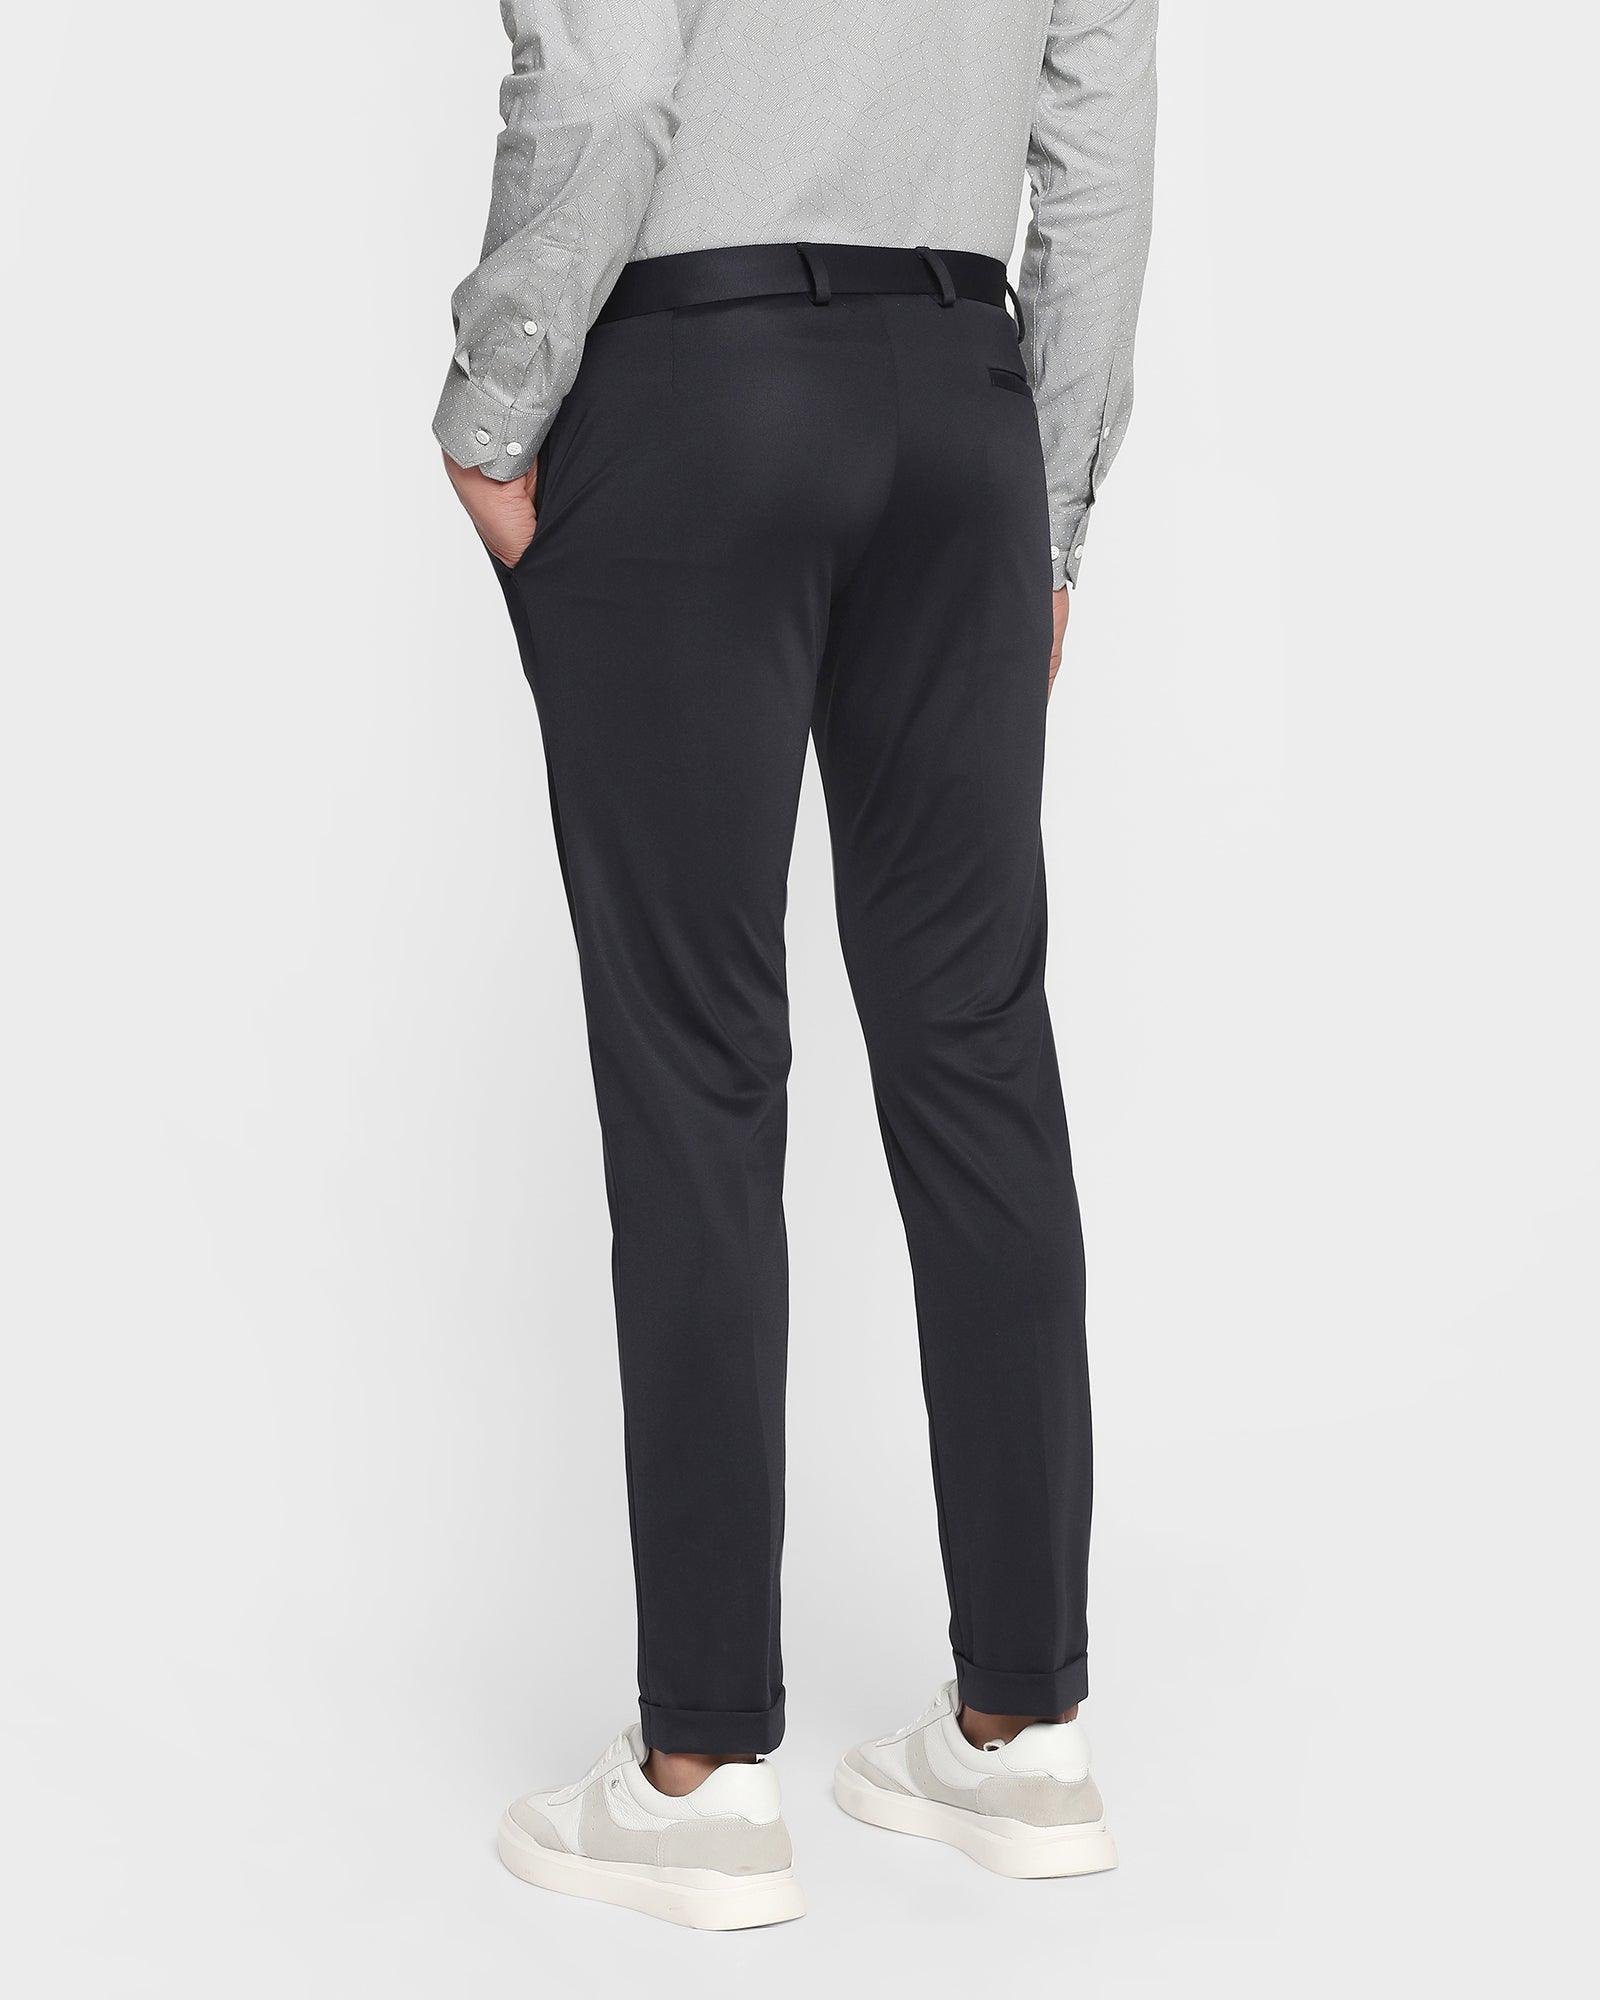 Buy Black Formal Trousers Online in India at Best Price - Westside